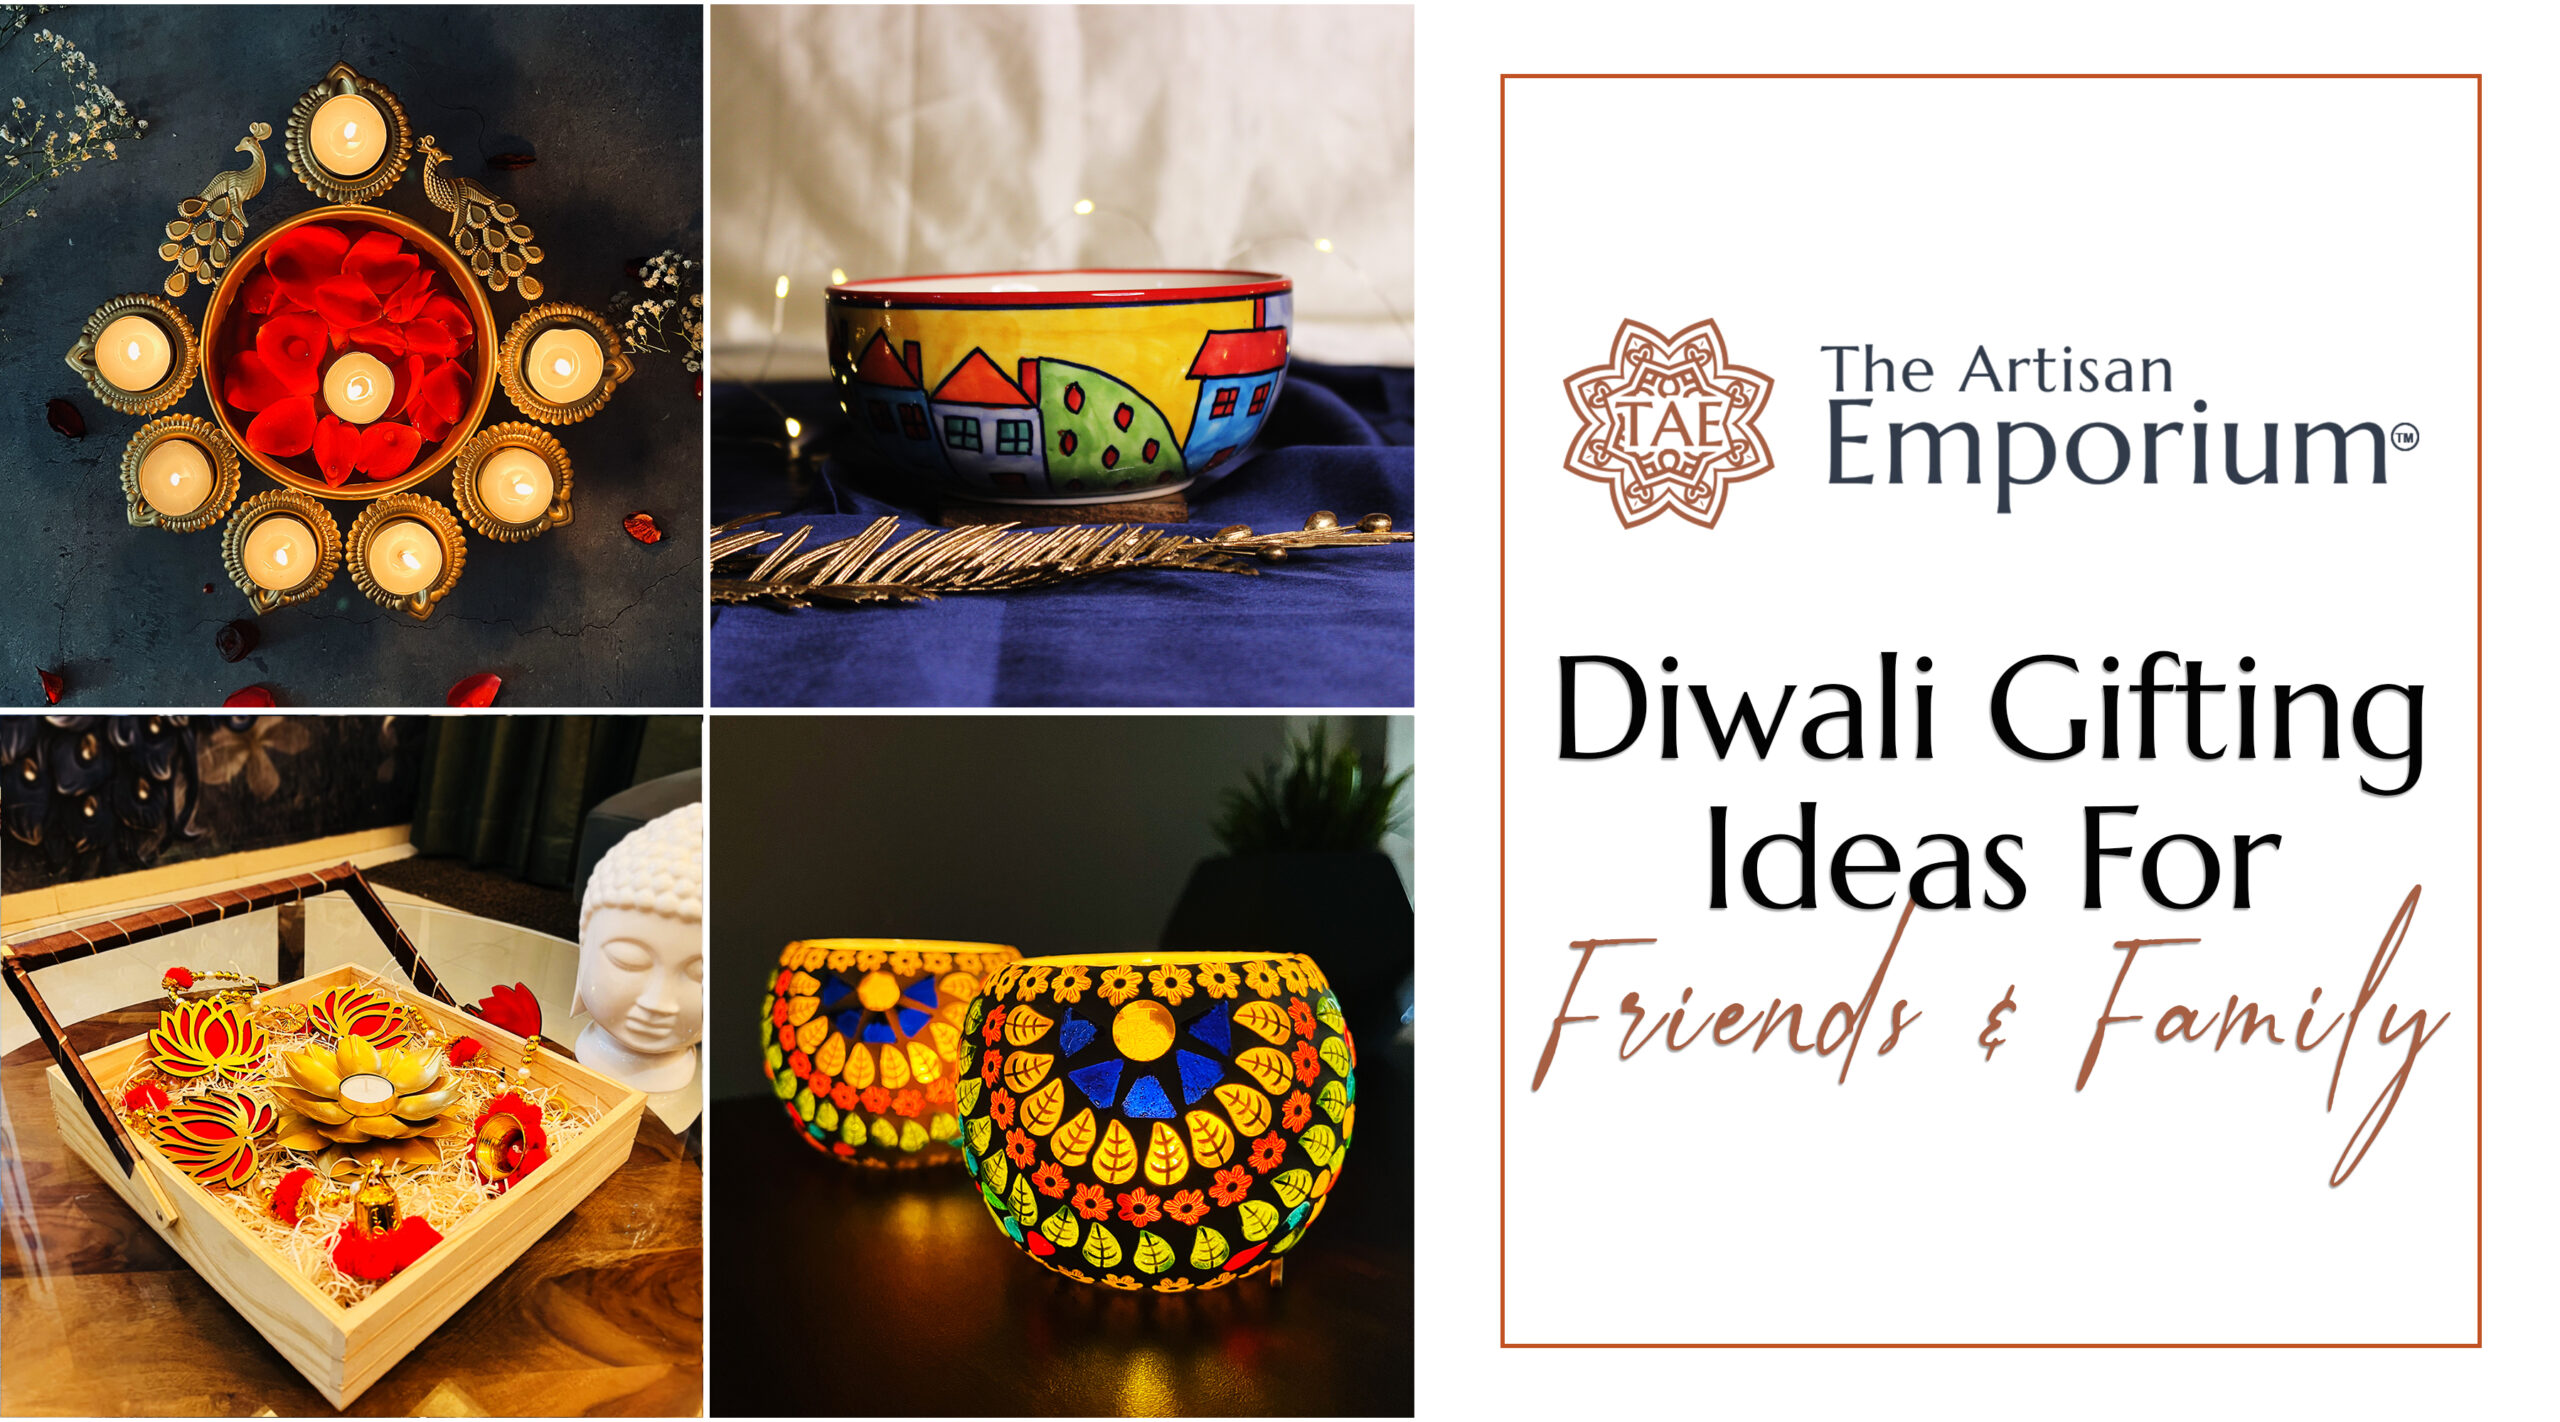 Diwali Gifting Ideas At The Artisan Emporium